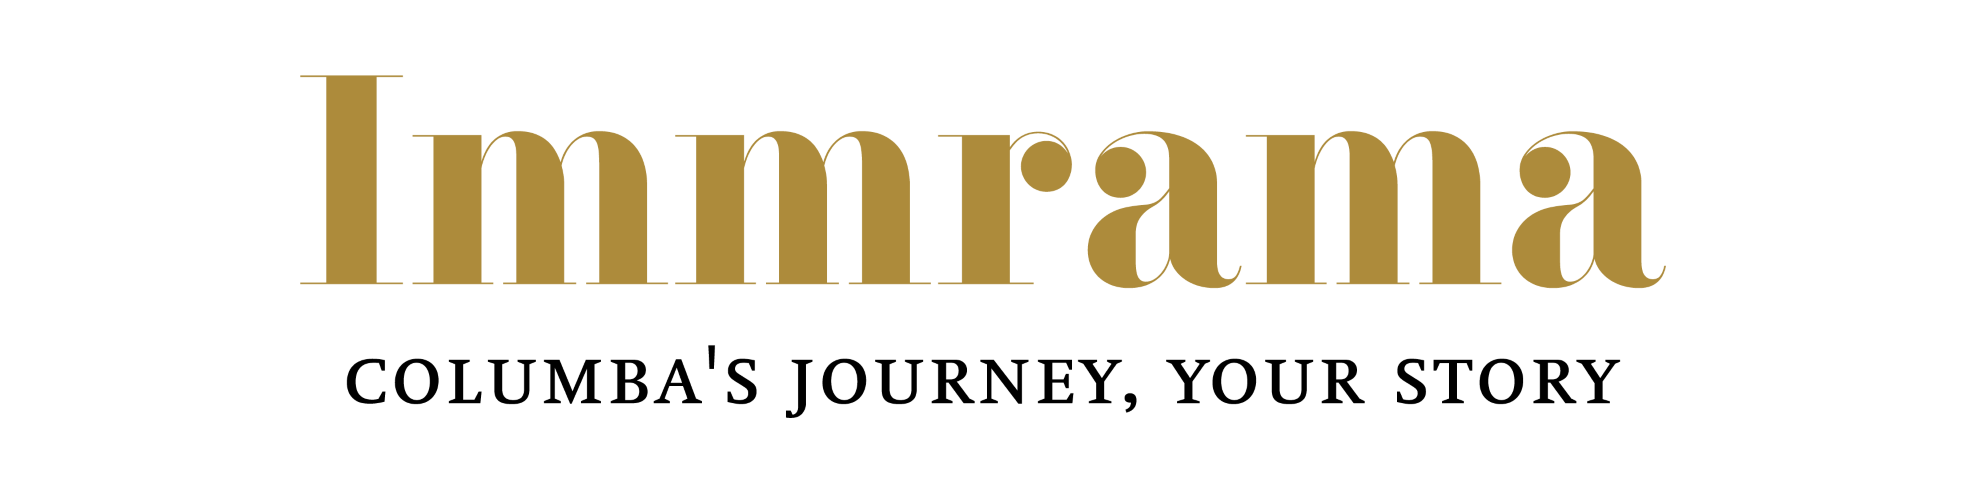 Immrama - Columba Exhibition, Edinburgh